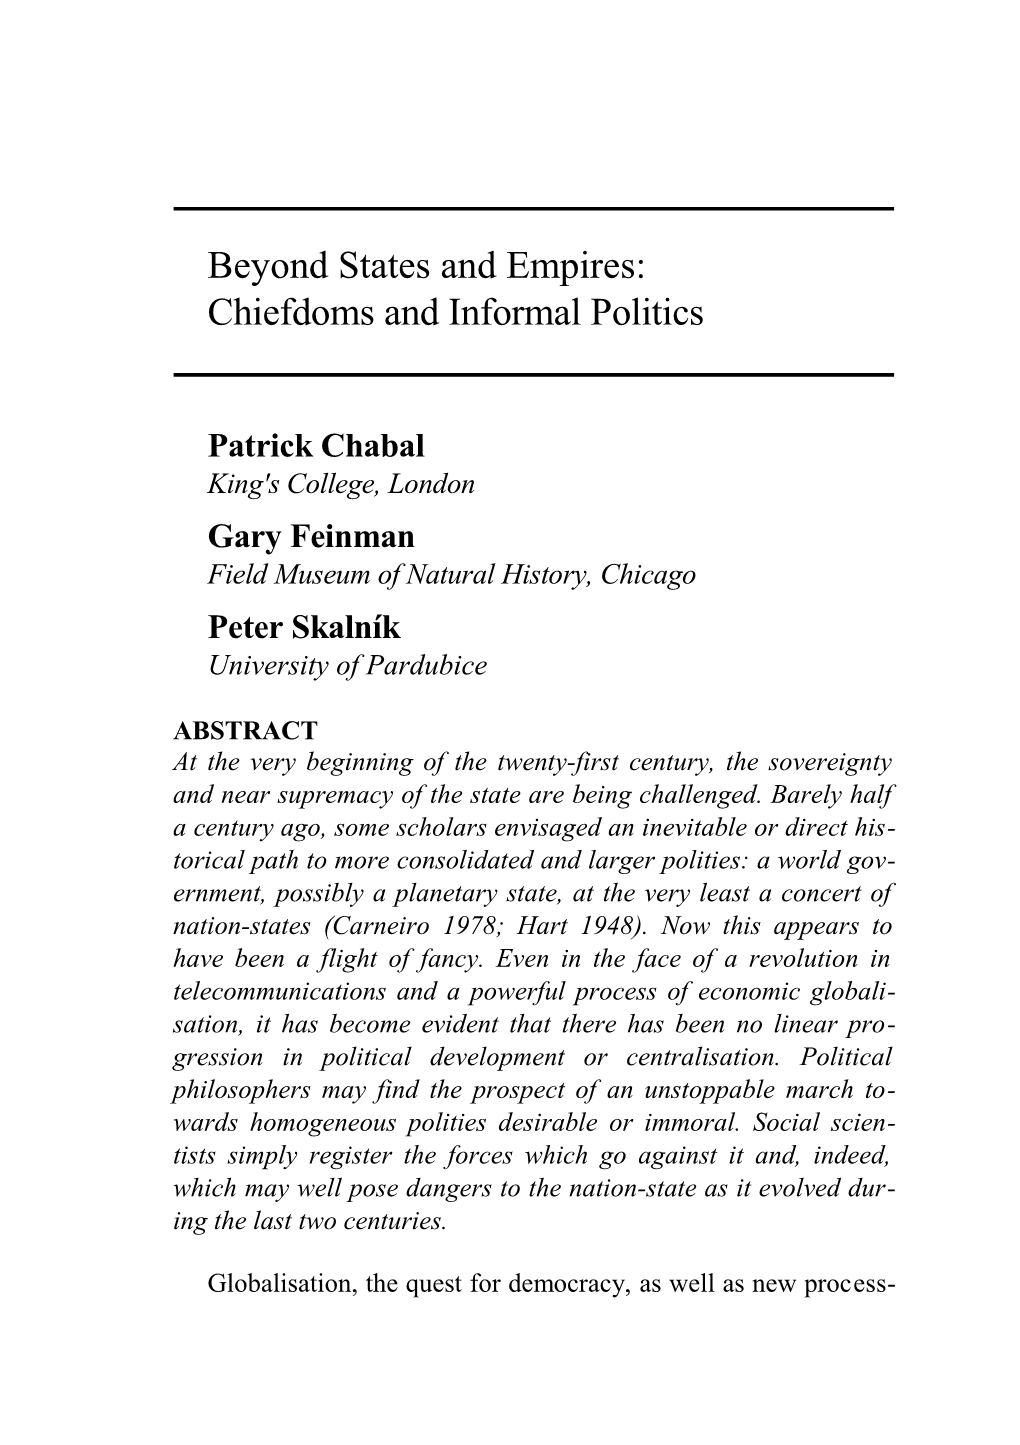 Chabal, Feinman, Skalník / Beyond States and Empires